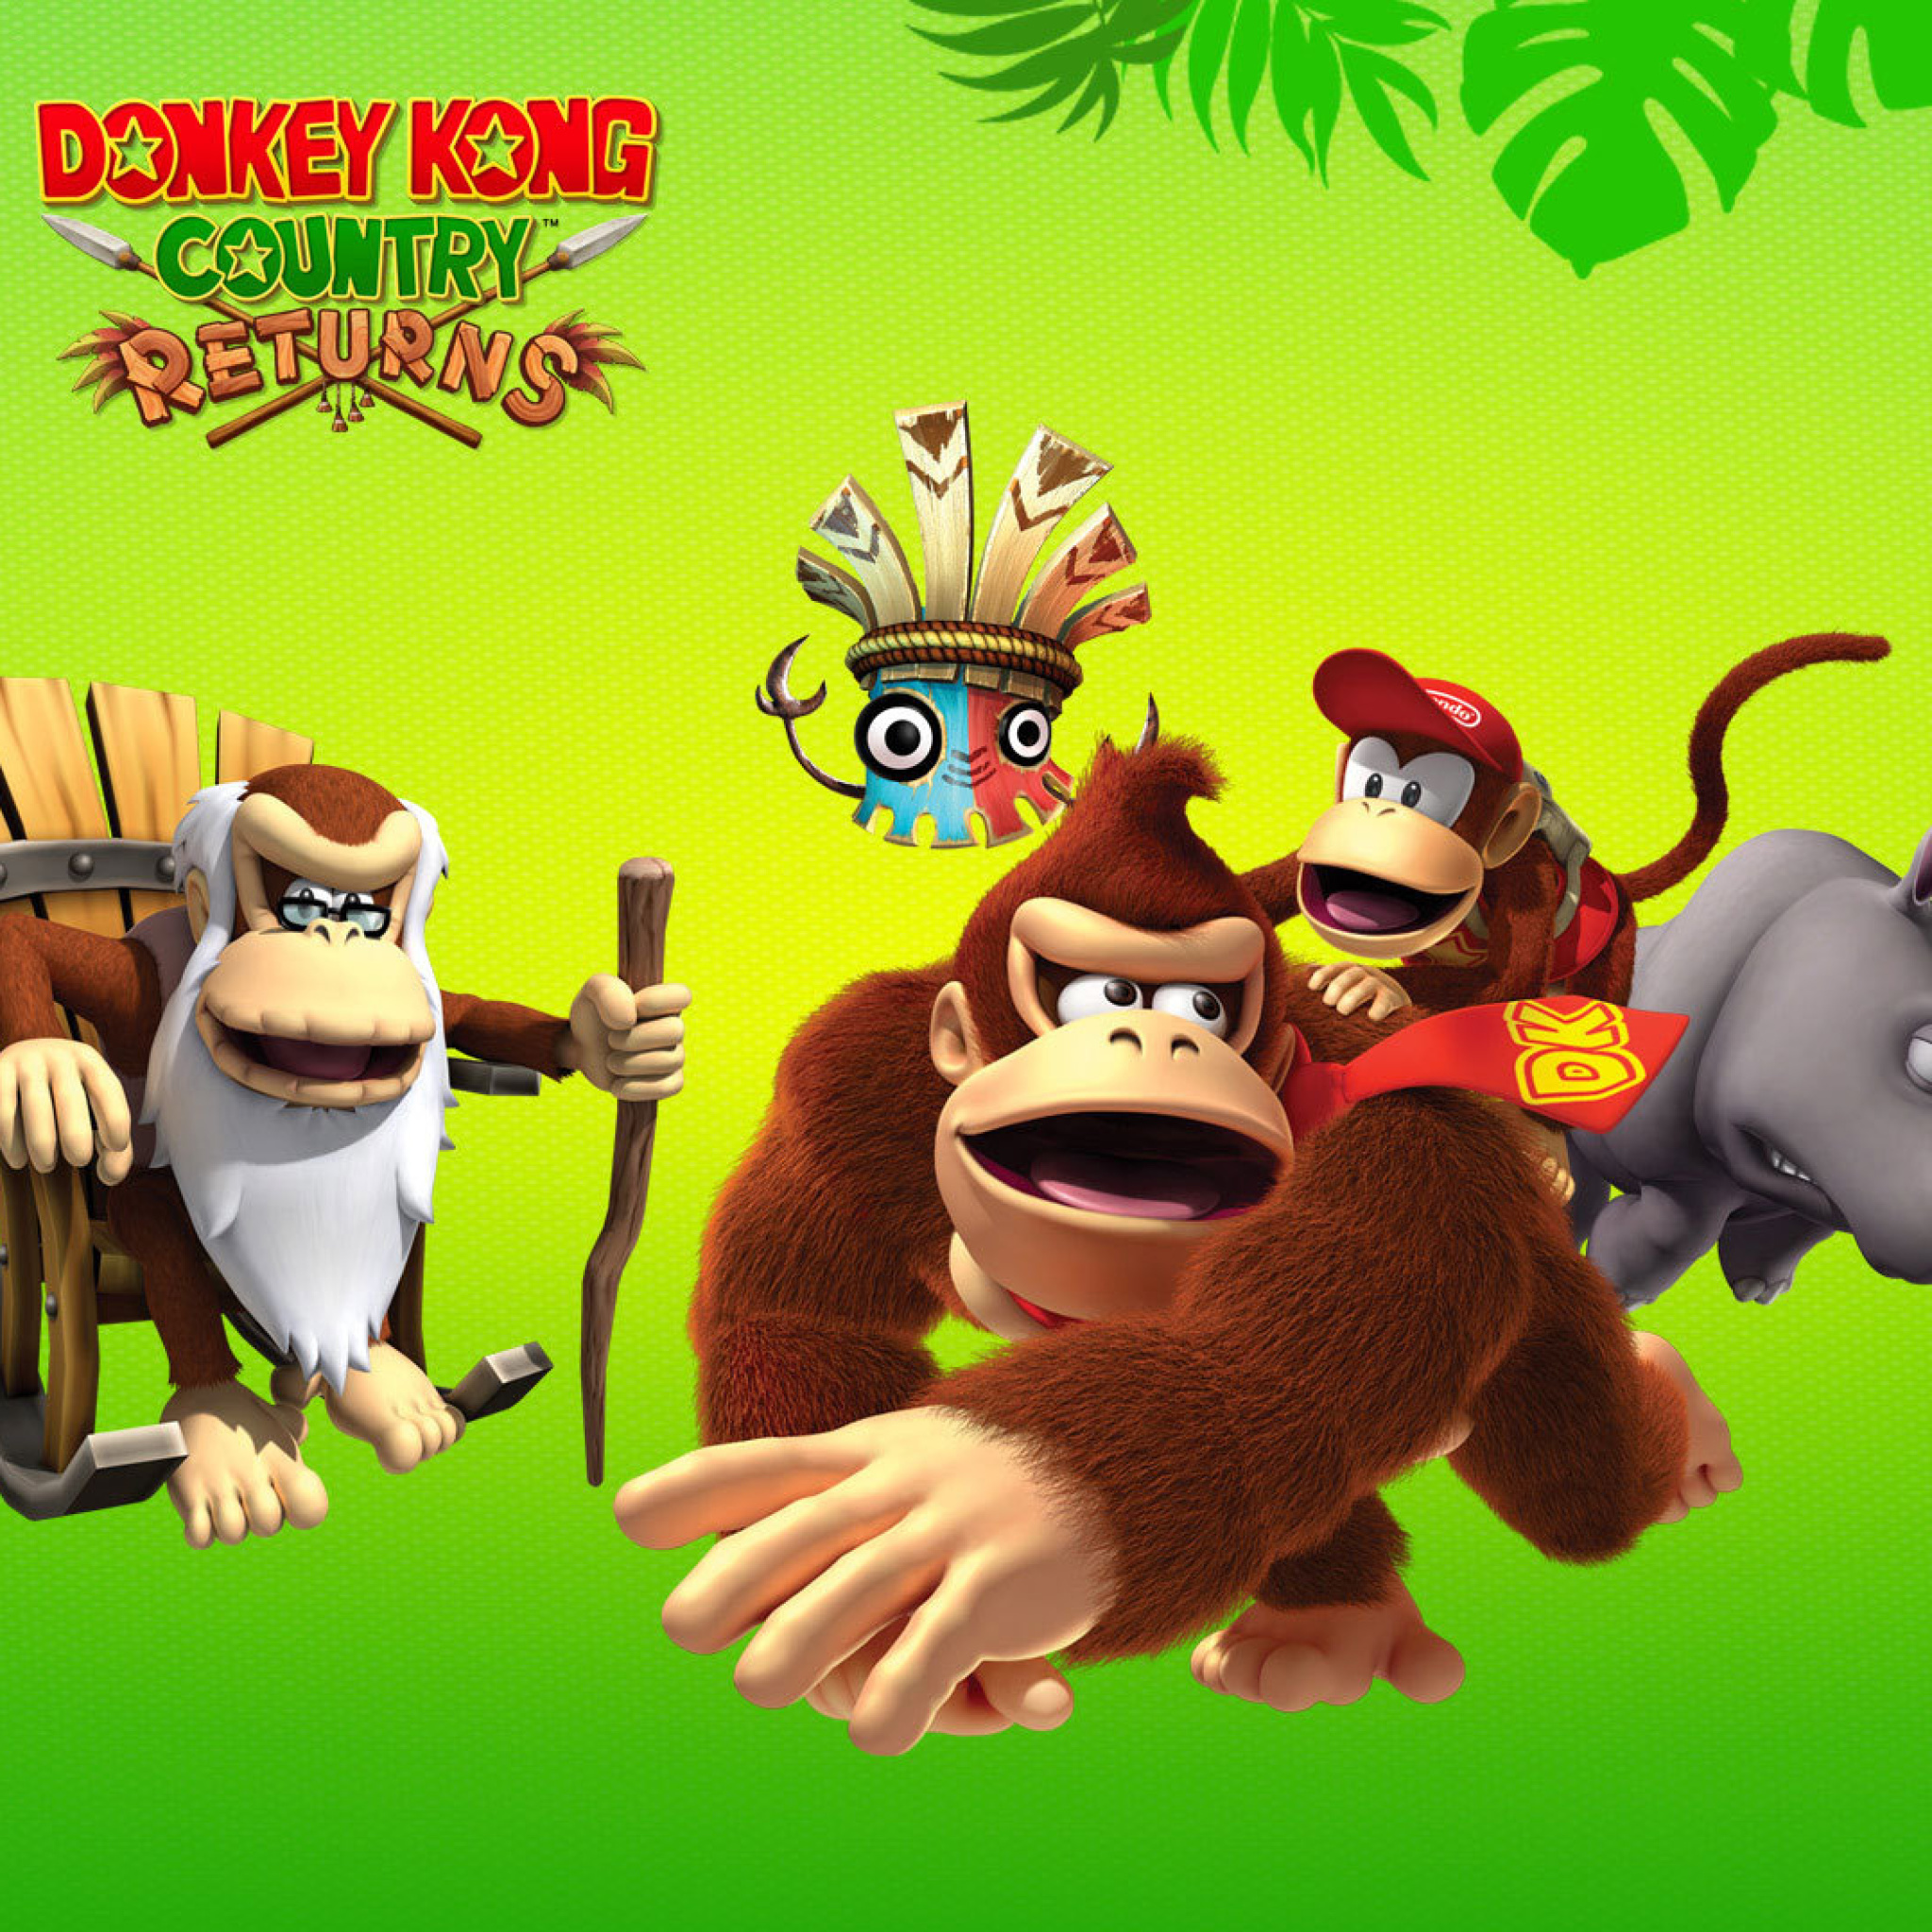 Donkey Kong Country Returns Arcade Game wallpaper 2048x2048